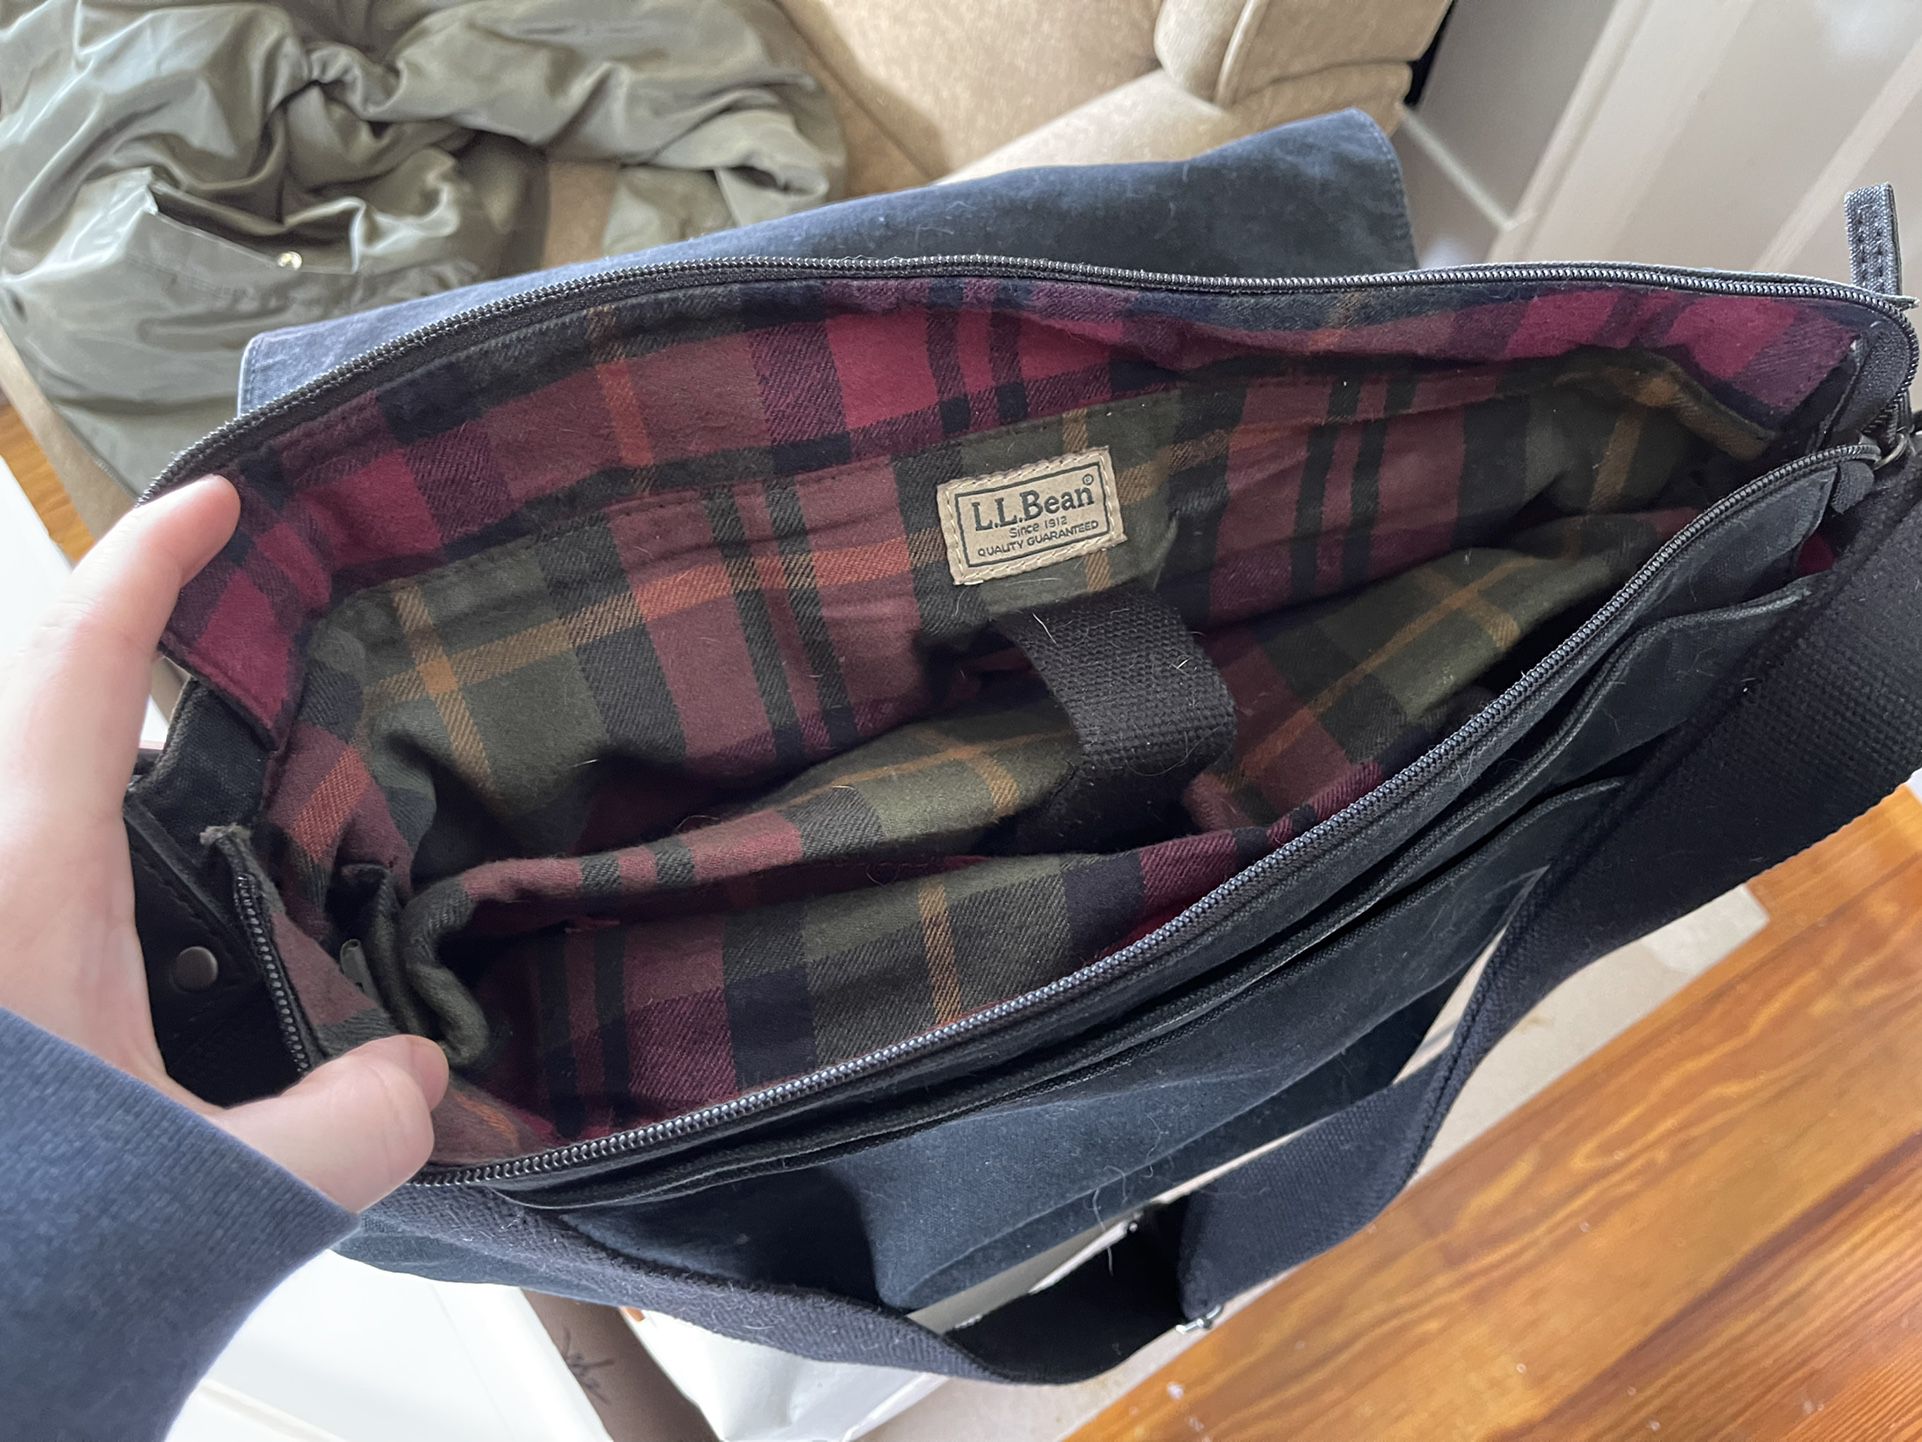 LL Bean Laptop Bag